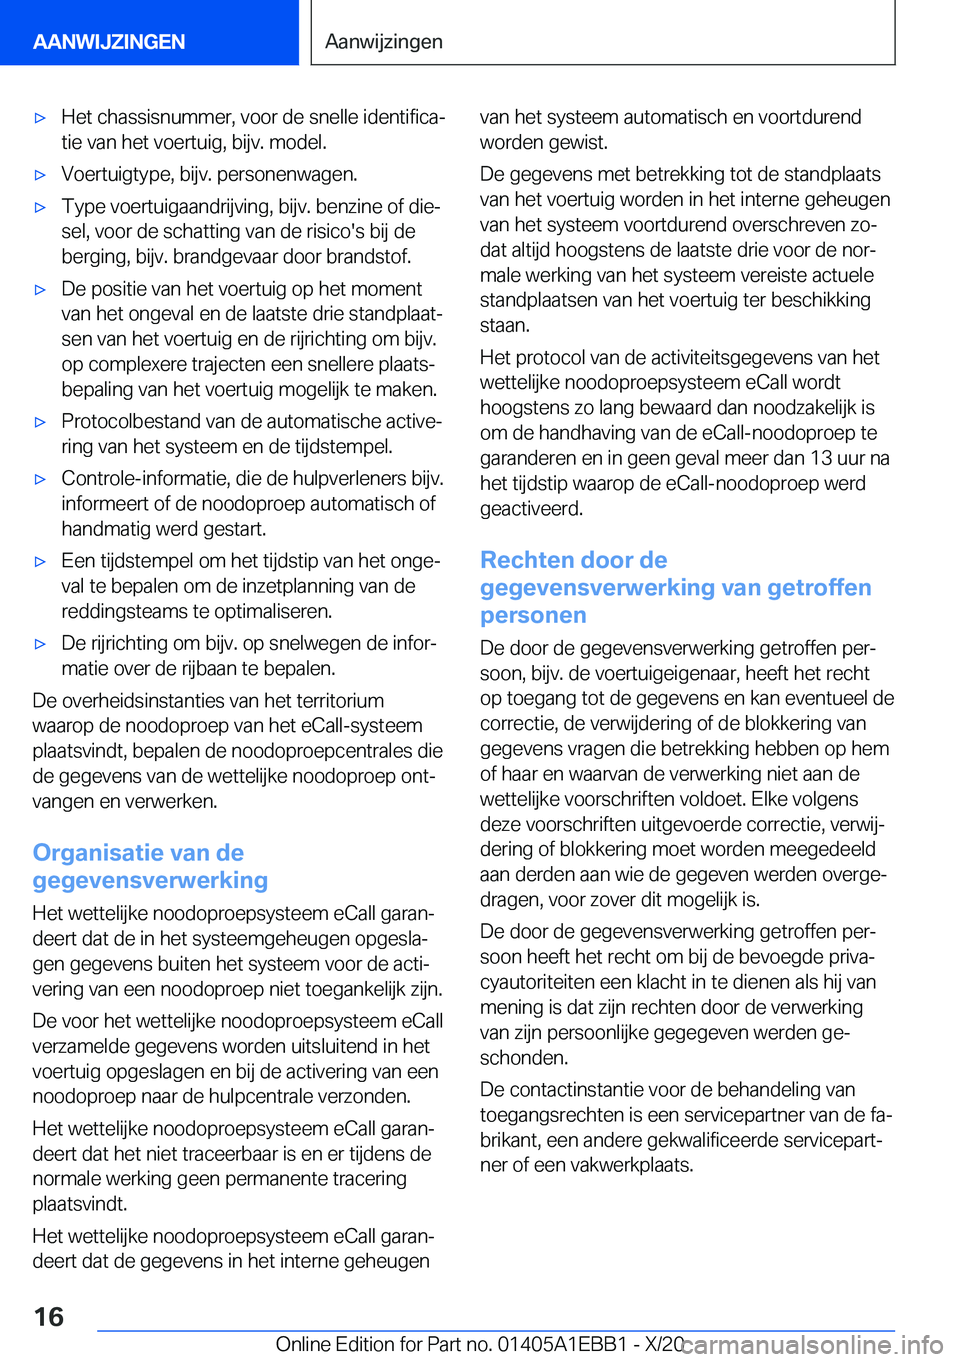 BMW 3 SERIES 2021  Instructieboekjes (in Dutch) 'x�H�e�t��c�h�a�s�s�i�s�n�u�m�m�e�r�,��v�o�o�r��d�e��s�n�e�l�l�e��i�d�e�n�t�i�f�i�c�aj
�t�i�e��v�a�n��h�e�t��v�o�e�r�t�u�i�g�,��b�i�j�v�.��m�o�d�e�l�.'x�V�o�e�r�t�u�i�g�t�y�p�e�,��